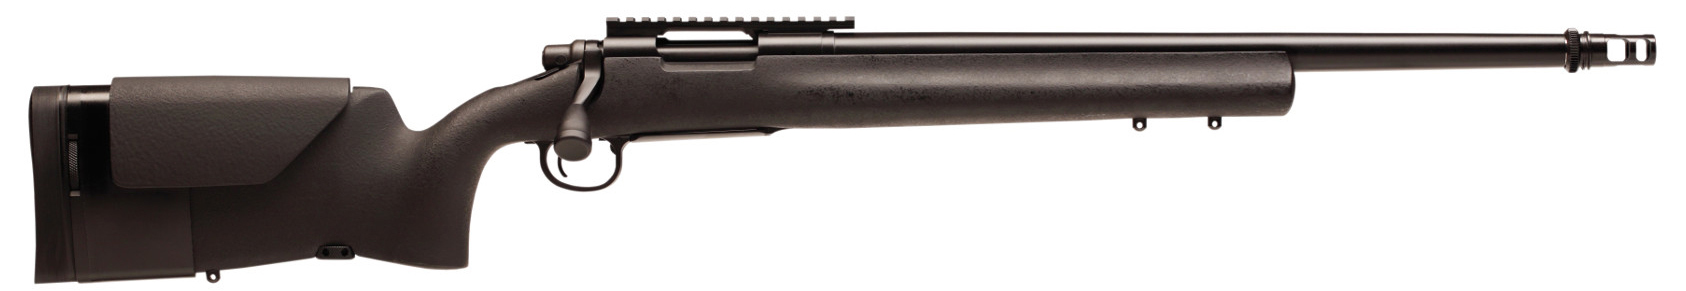 40X TIR (Target Interdiction Rifle)